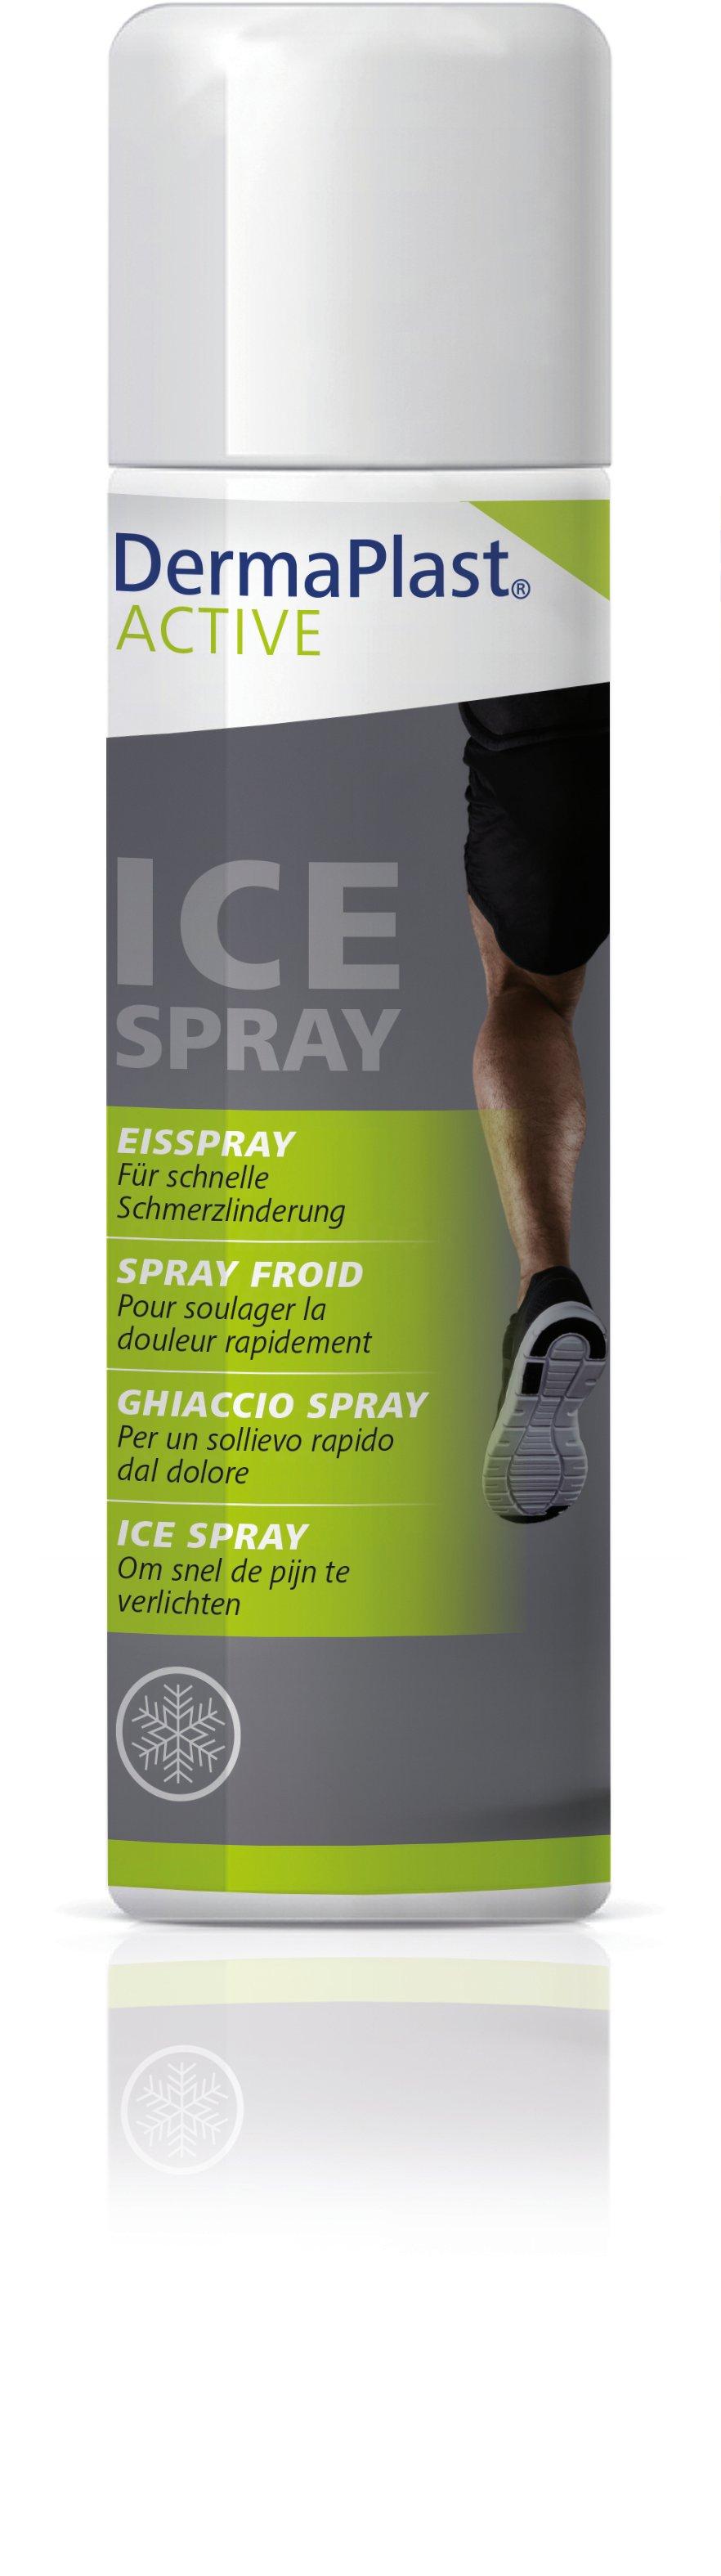 Image of DermaPlast Active Ice Spray Active Ice Spray - ONE SIZE